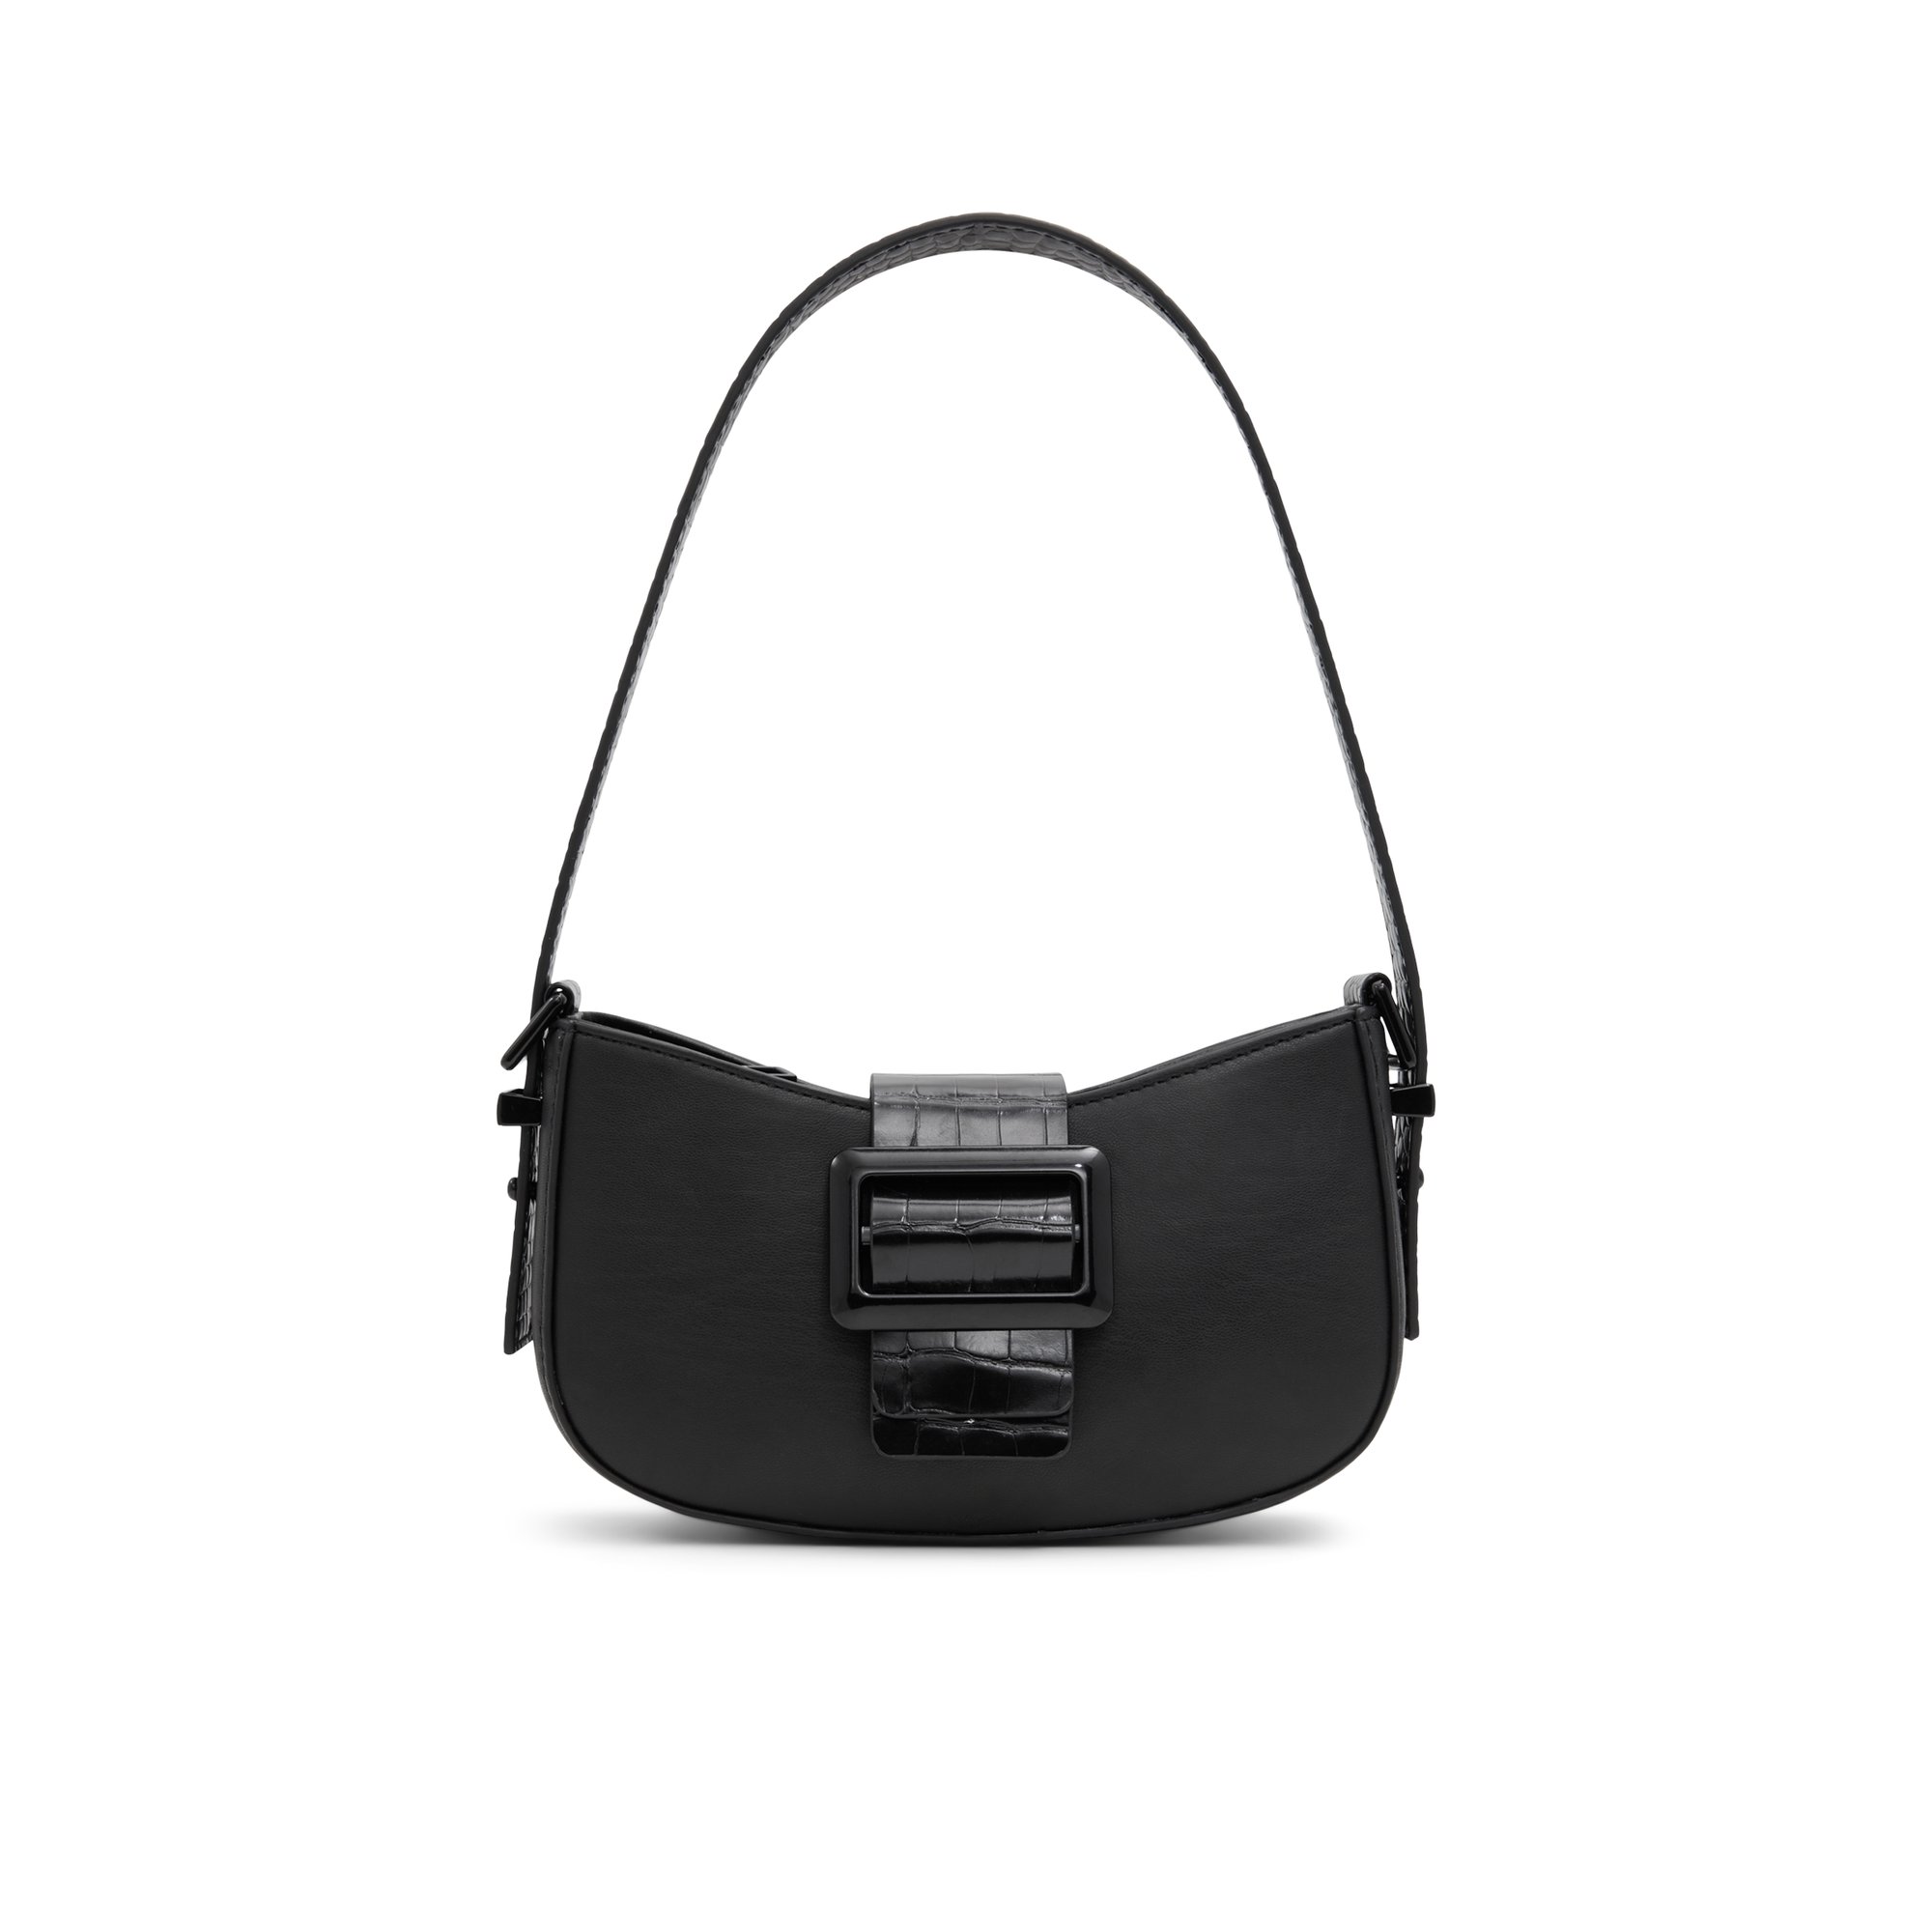 ALDO Alielx - Women's Handbags Shoulder Bags - Black